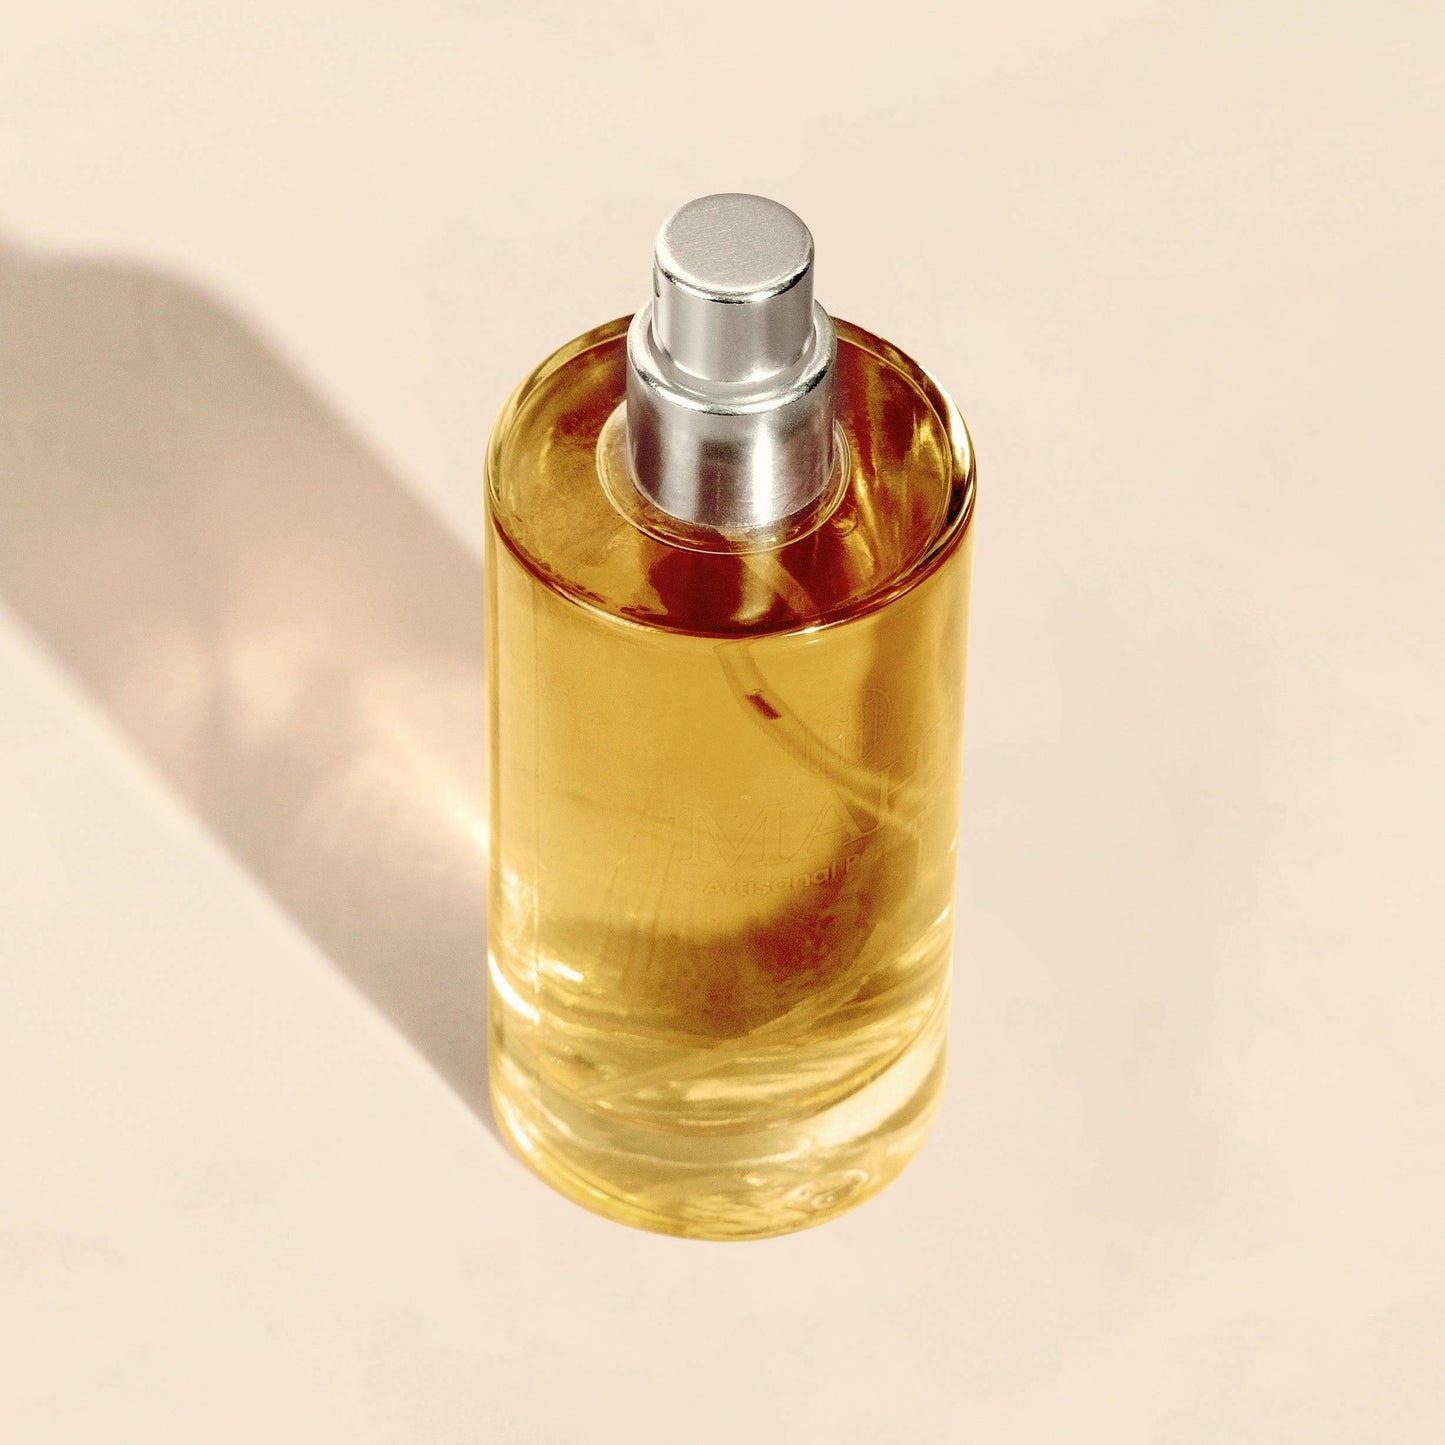 Perfume Bottles Wholesale - Empty Perfume Bottles in Bulk